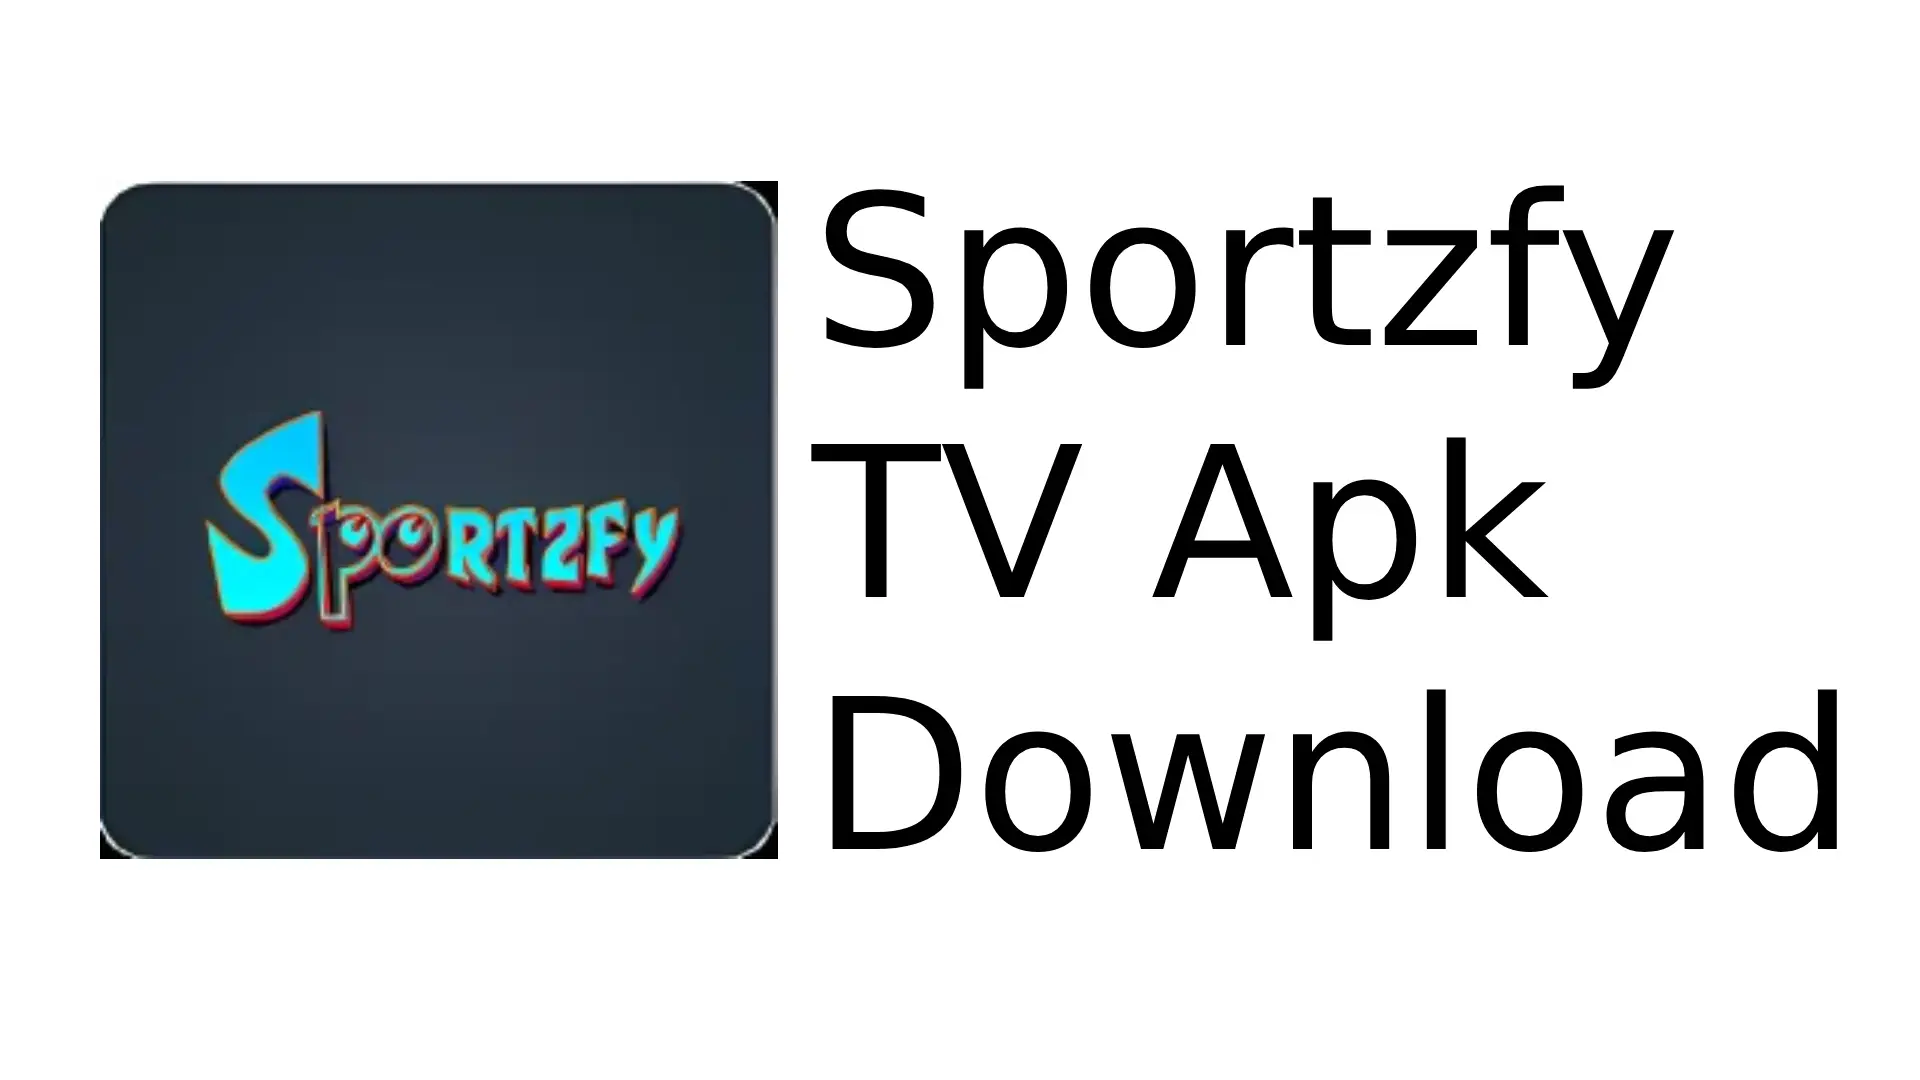 Sportzfy TV Apk Download